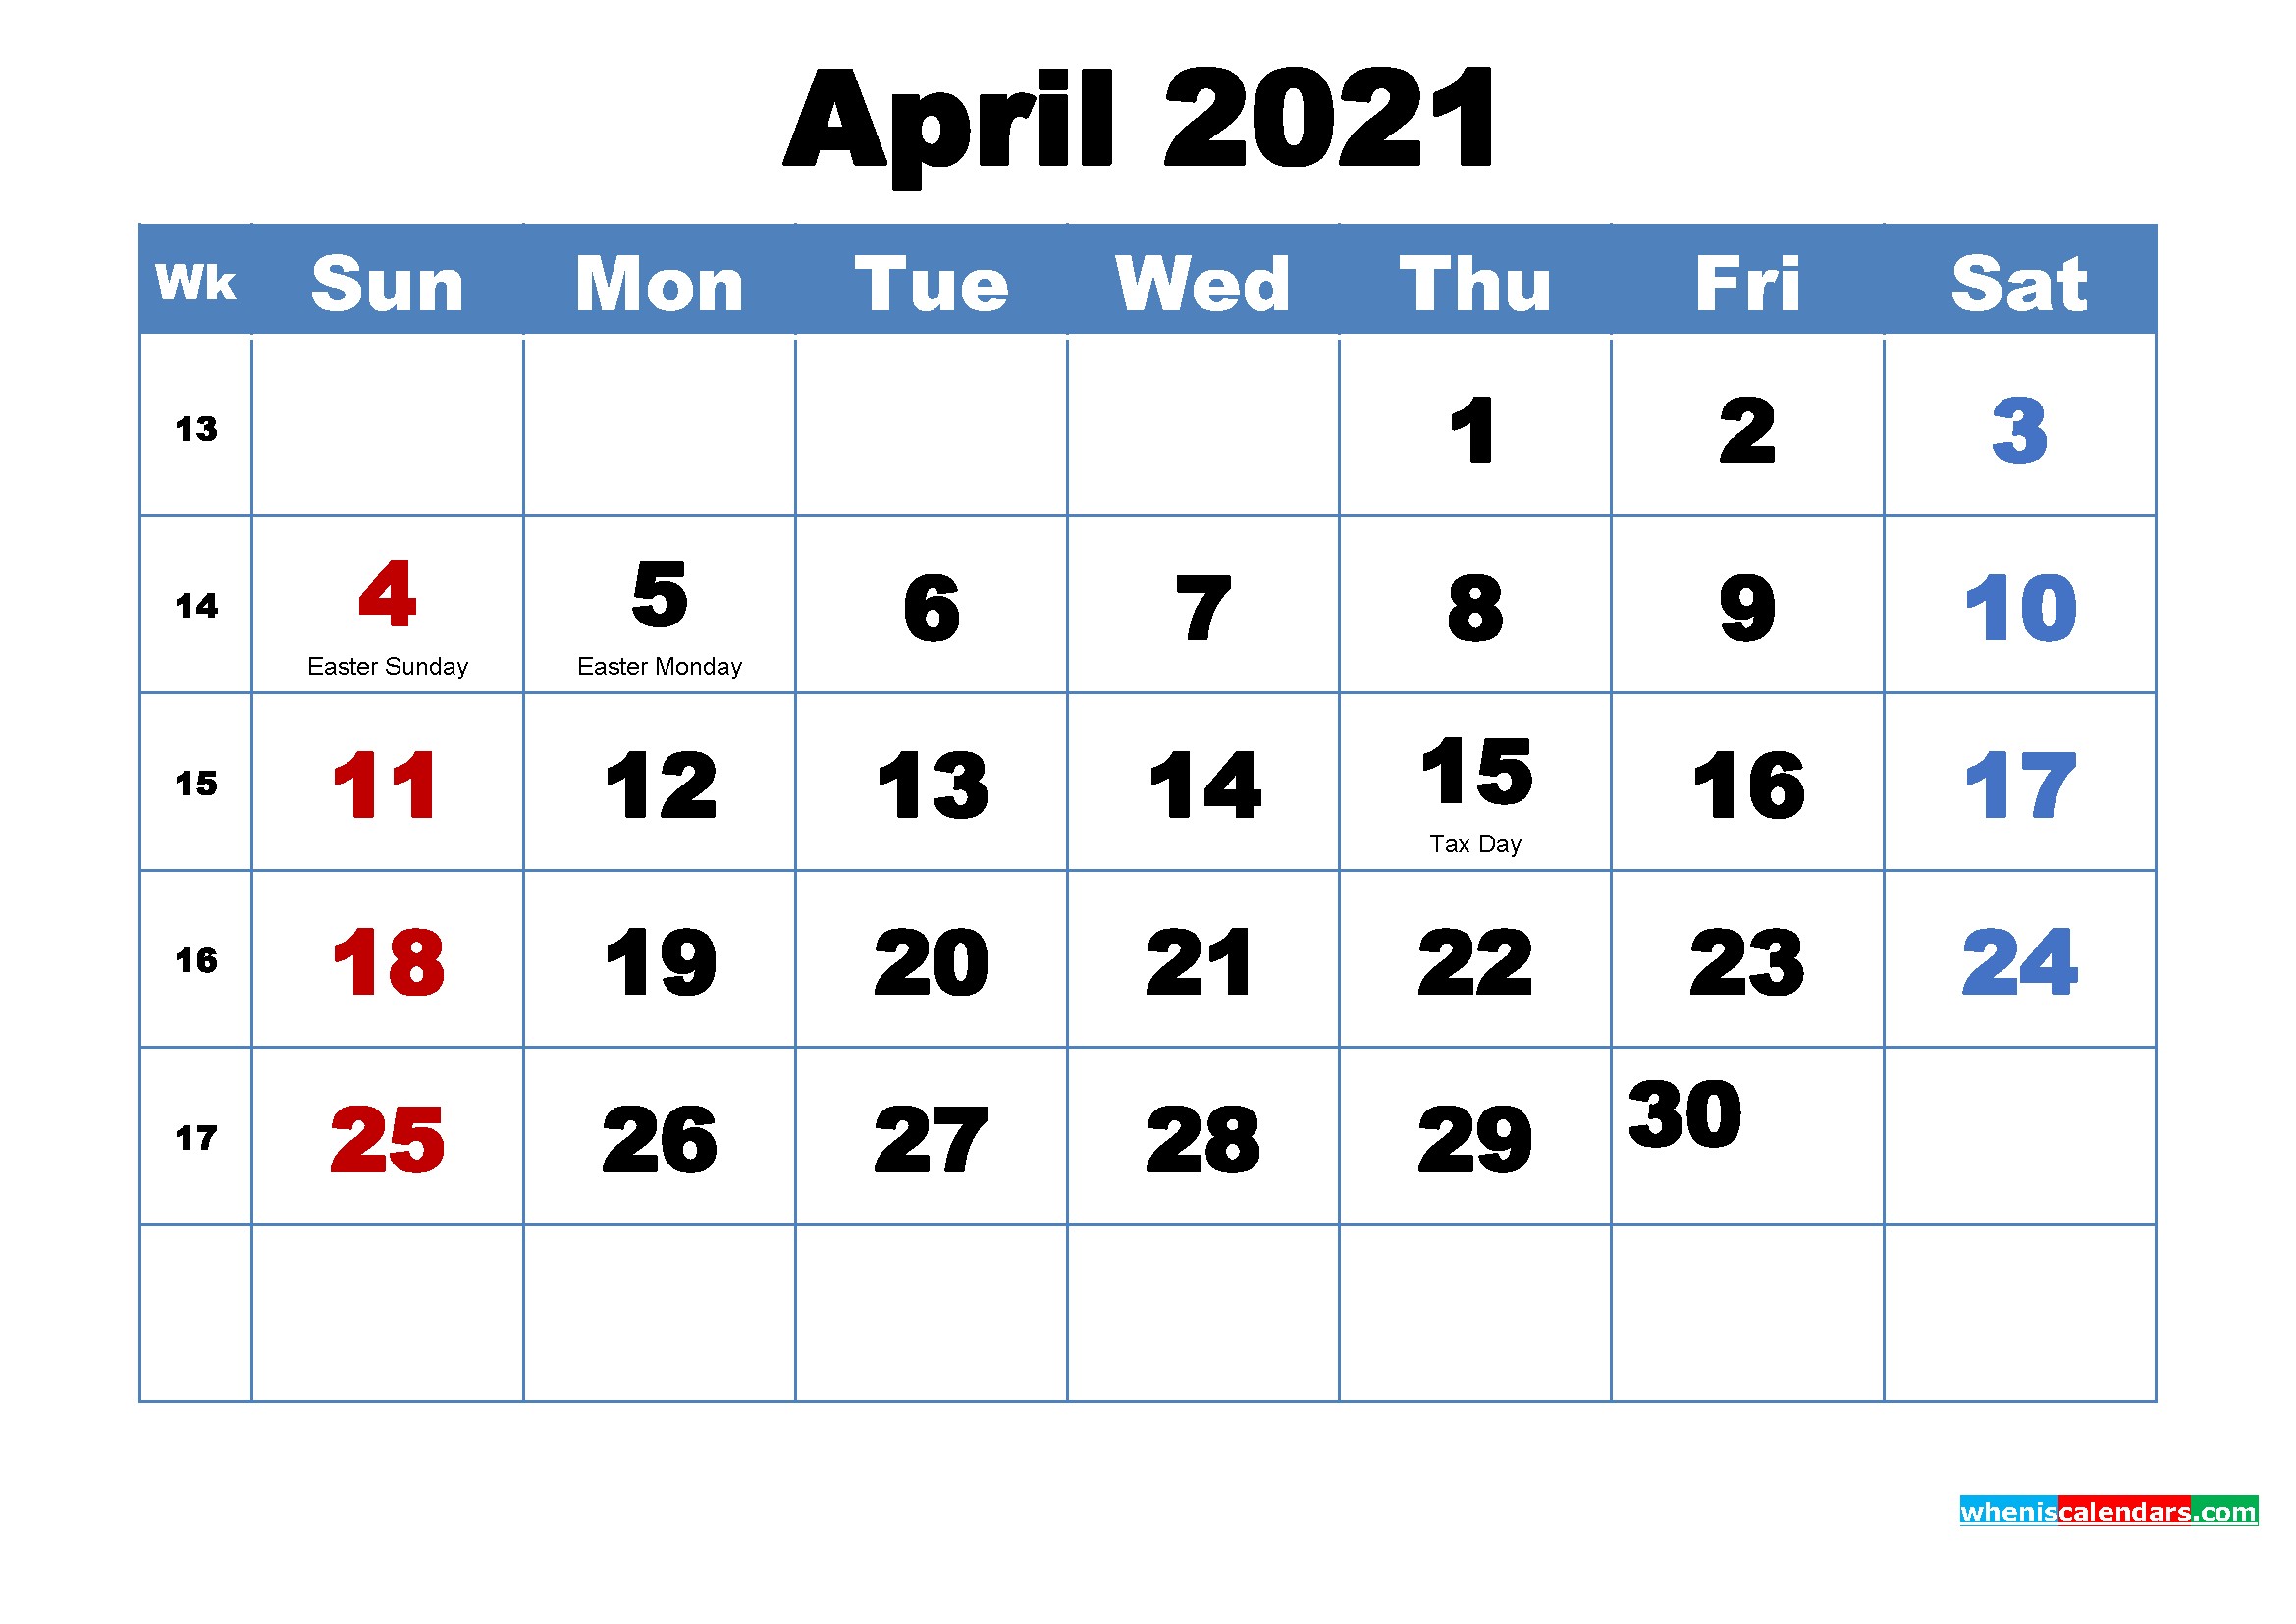 April 2021 Calendar Wallpaper Free Download – Free